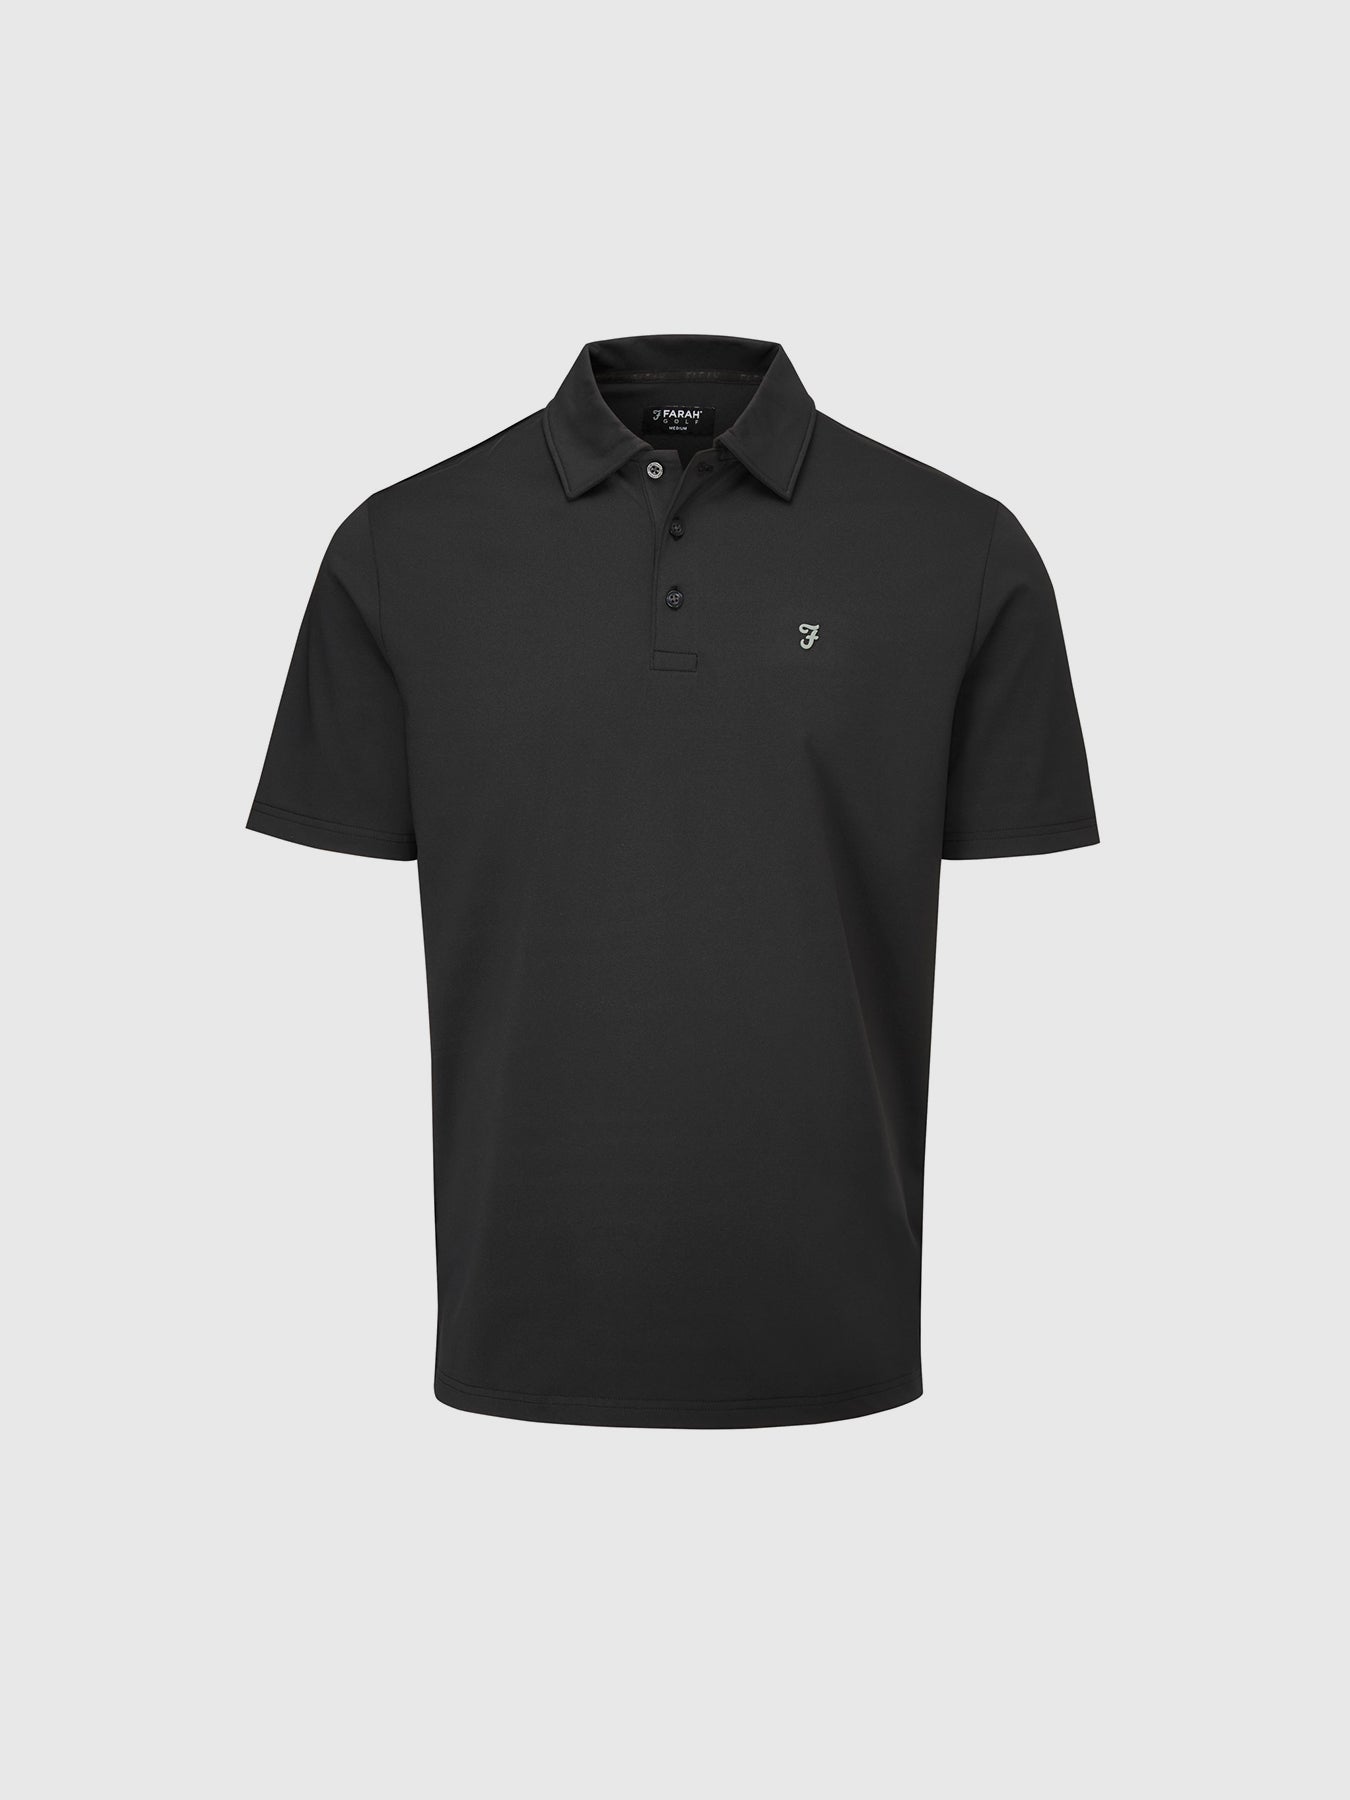 View Keller Golf Polo Shirt In Black information